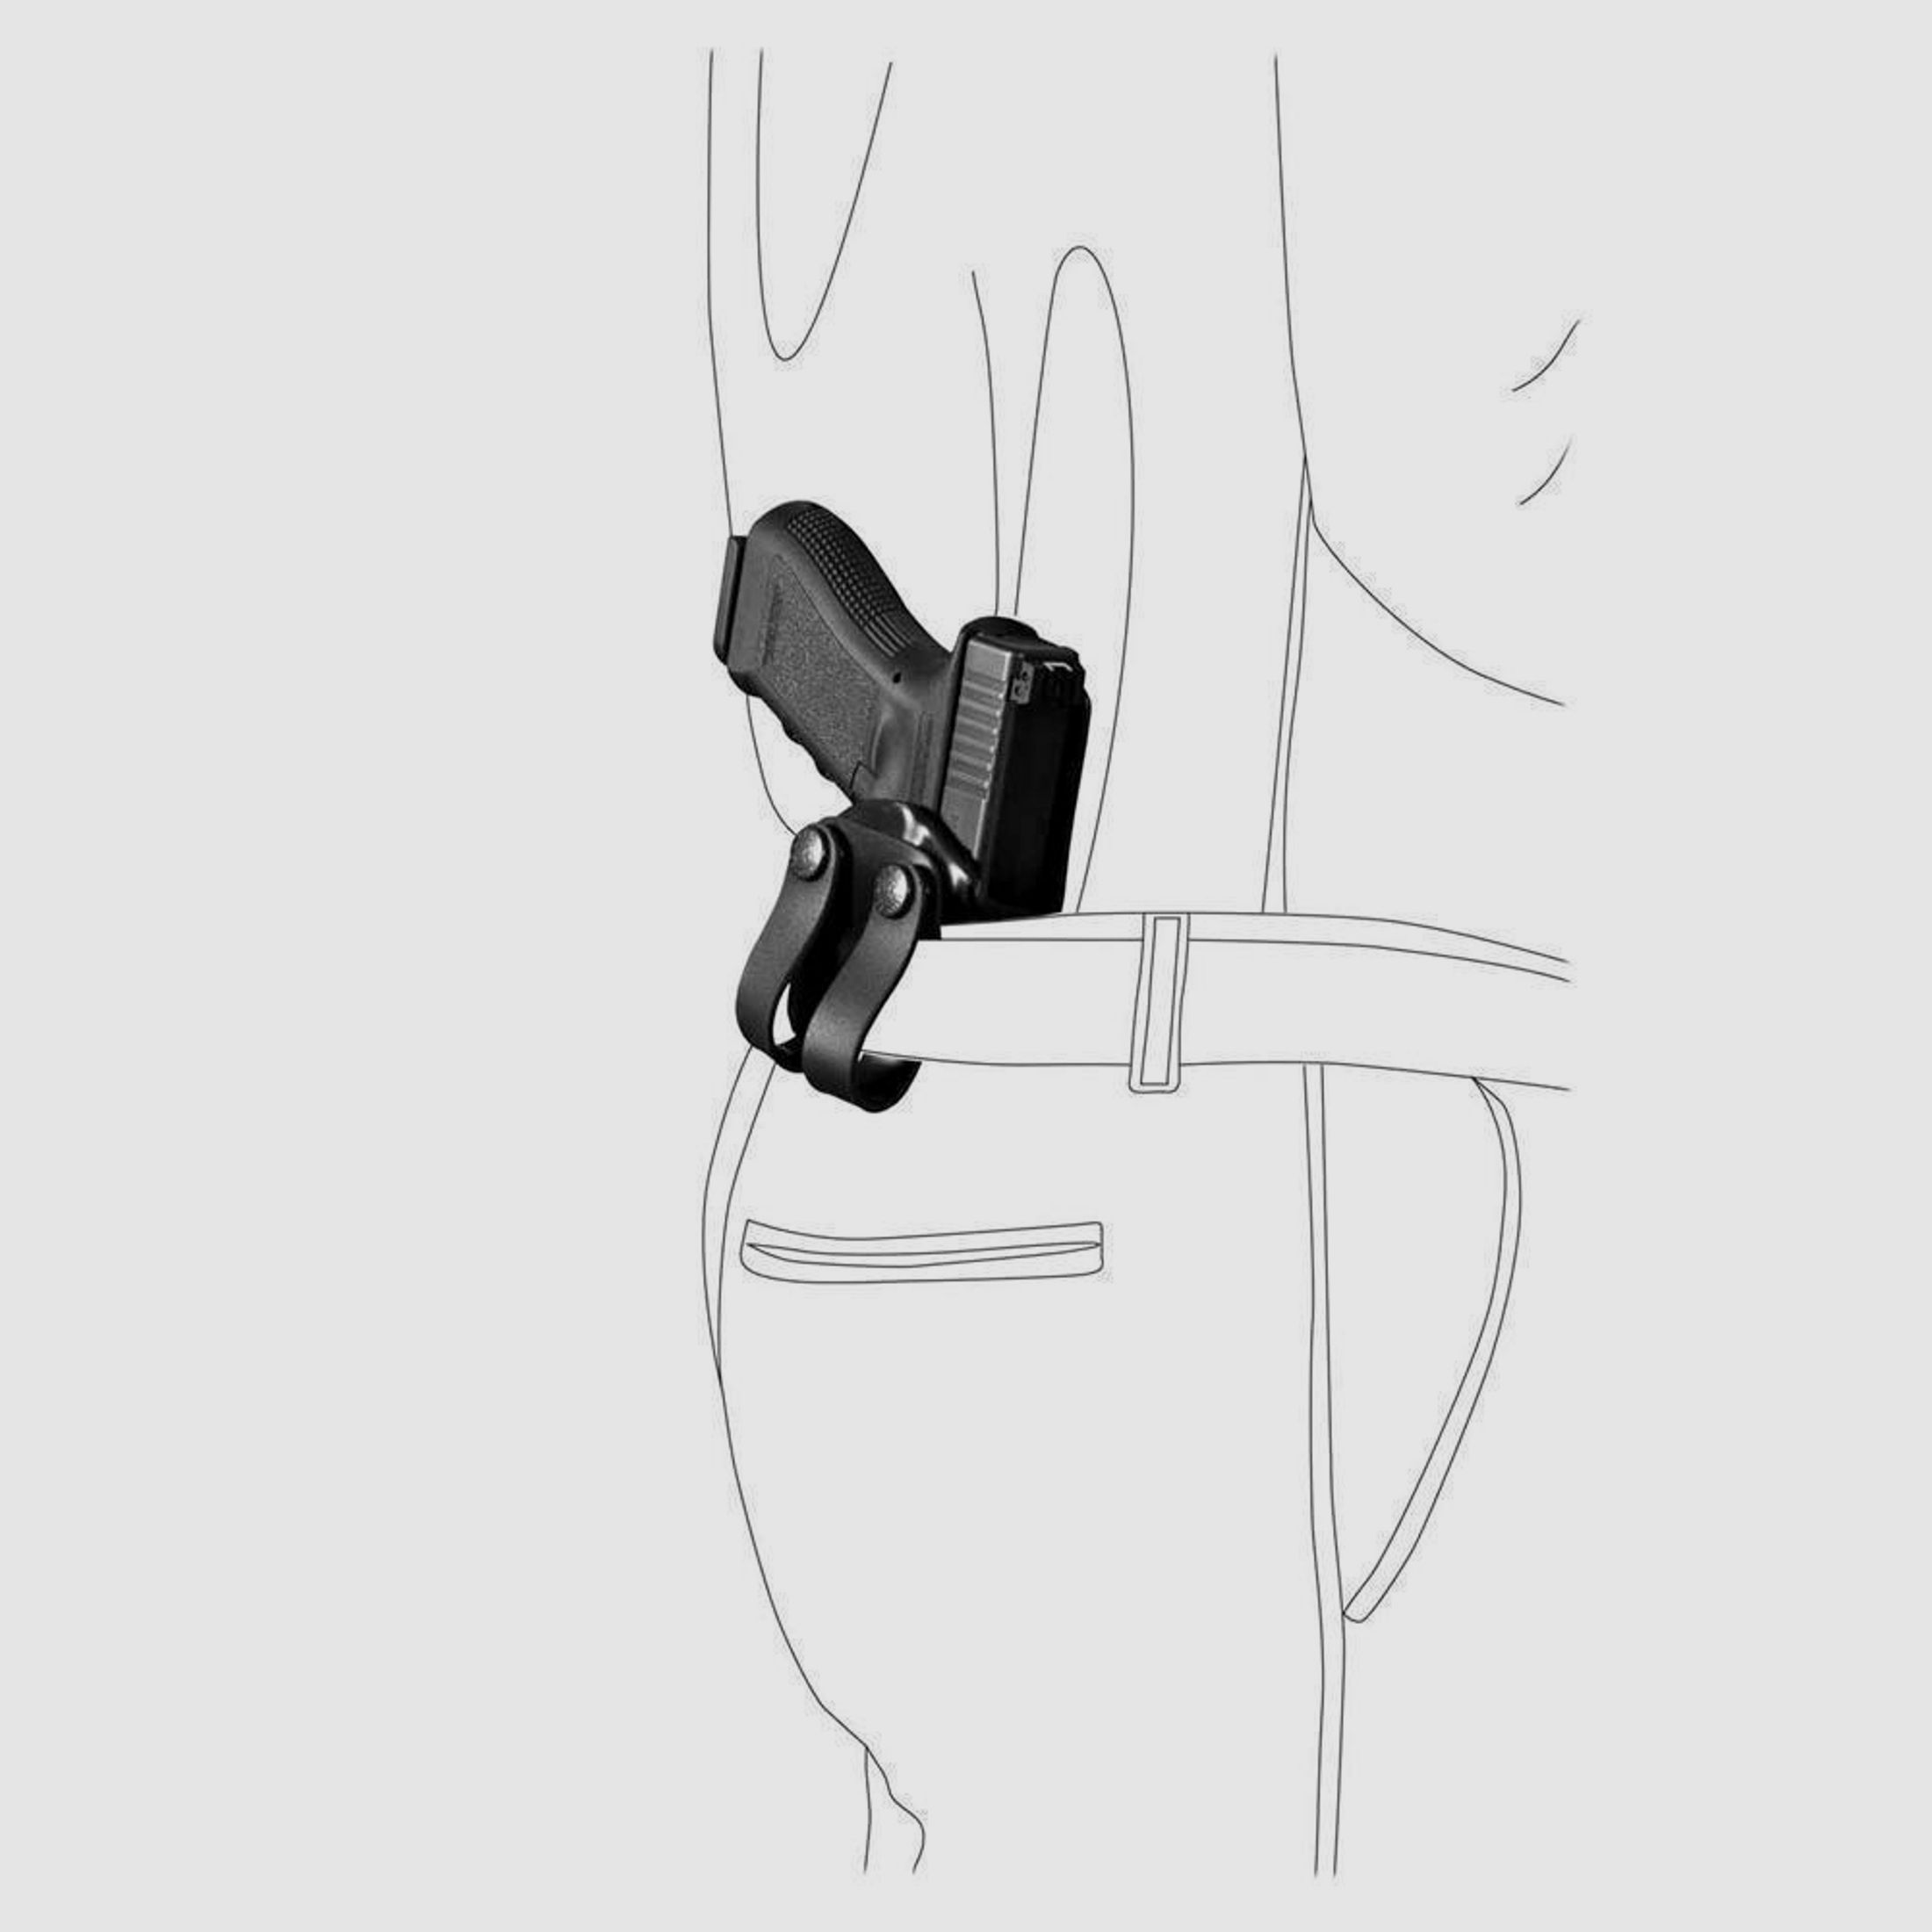 Innenholster "INSIDE RESCUE" Beretta PX4 Storm / Compact Linkshänder